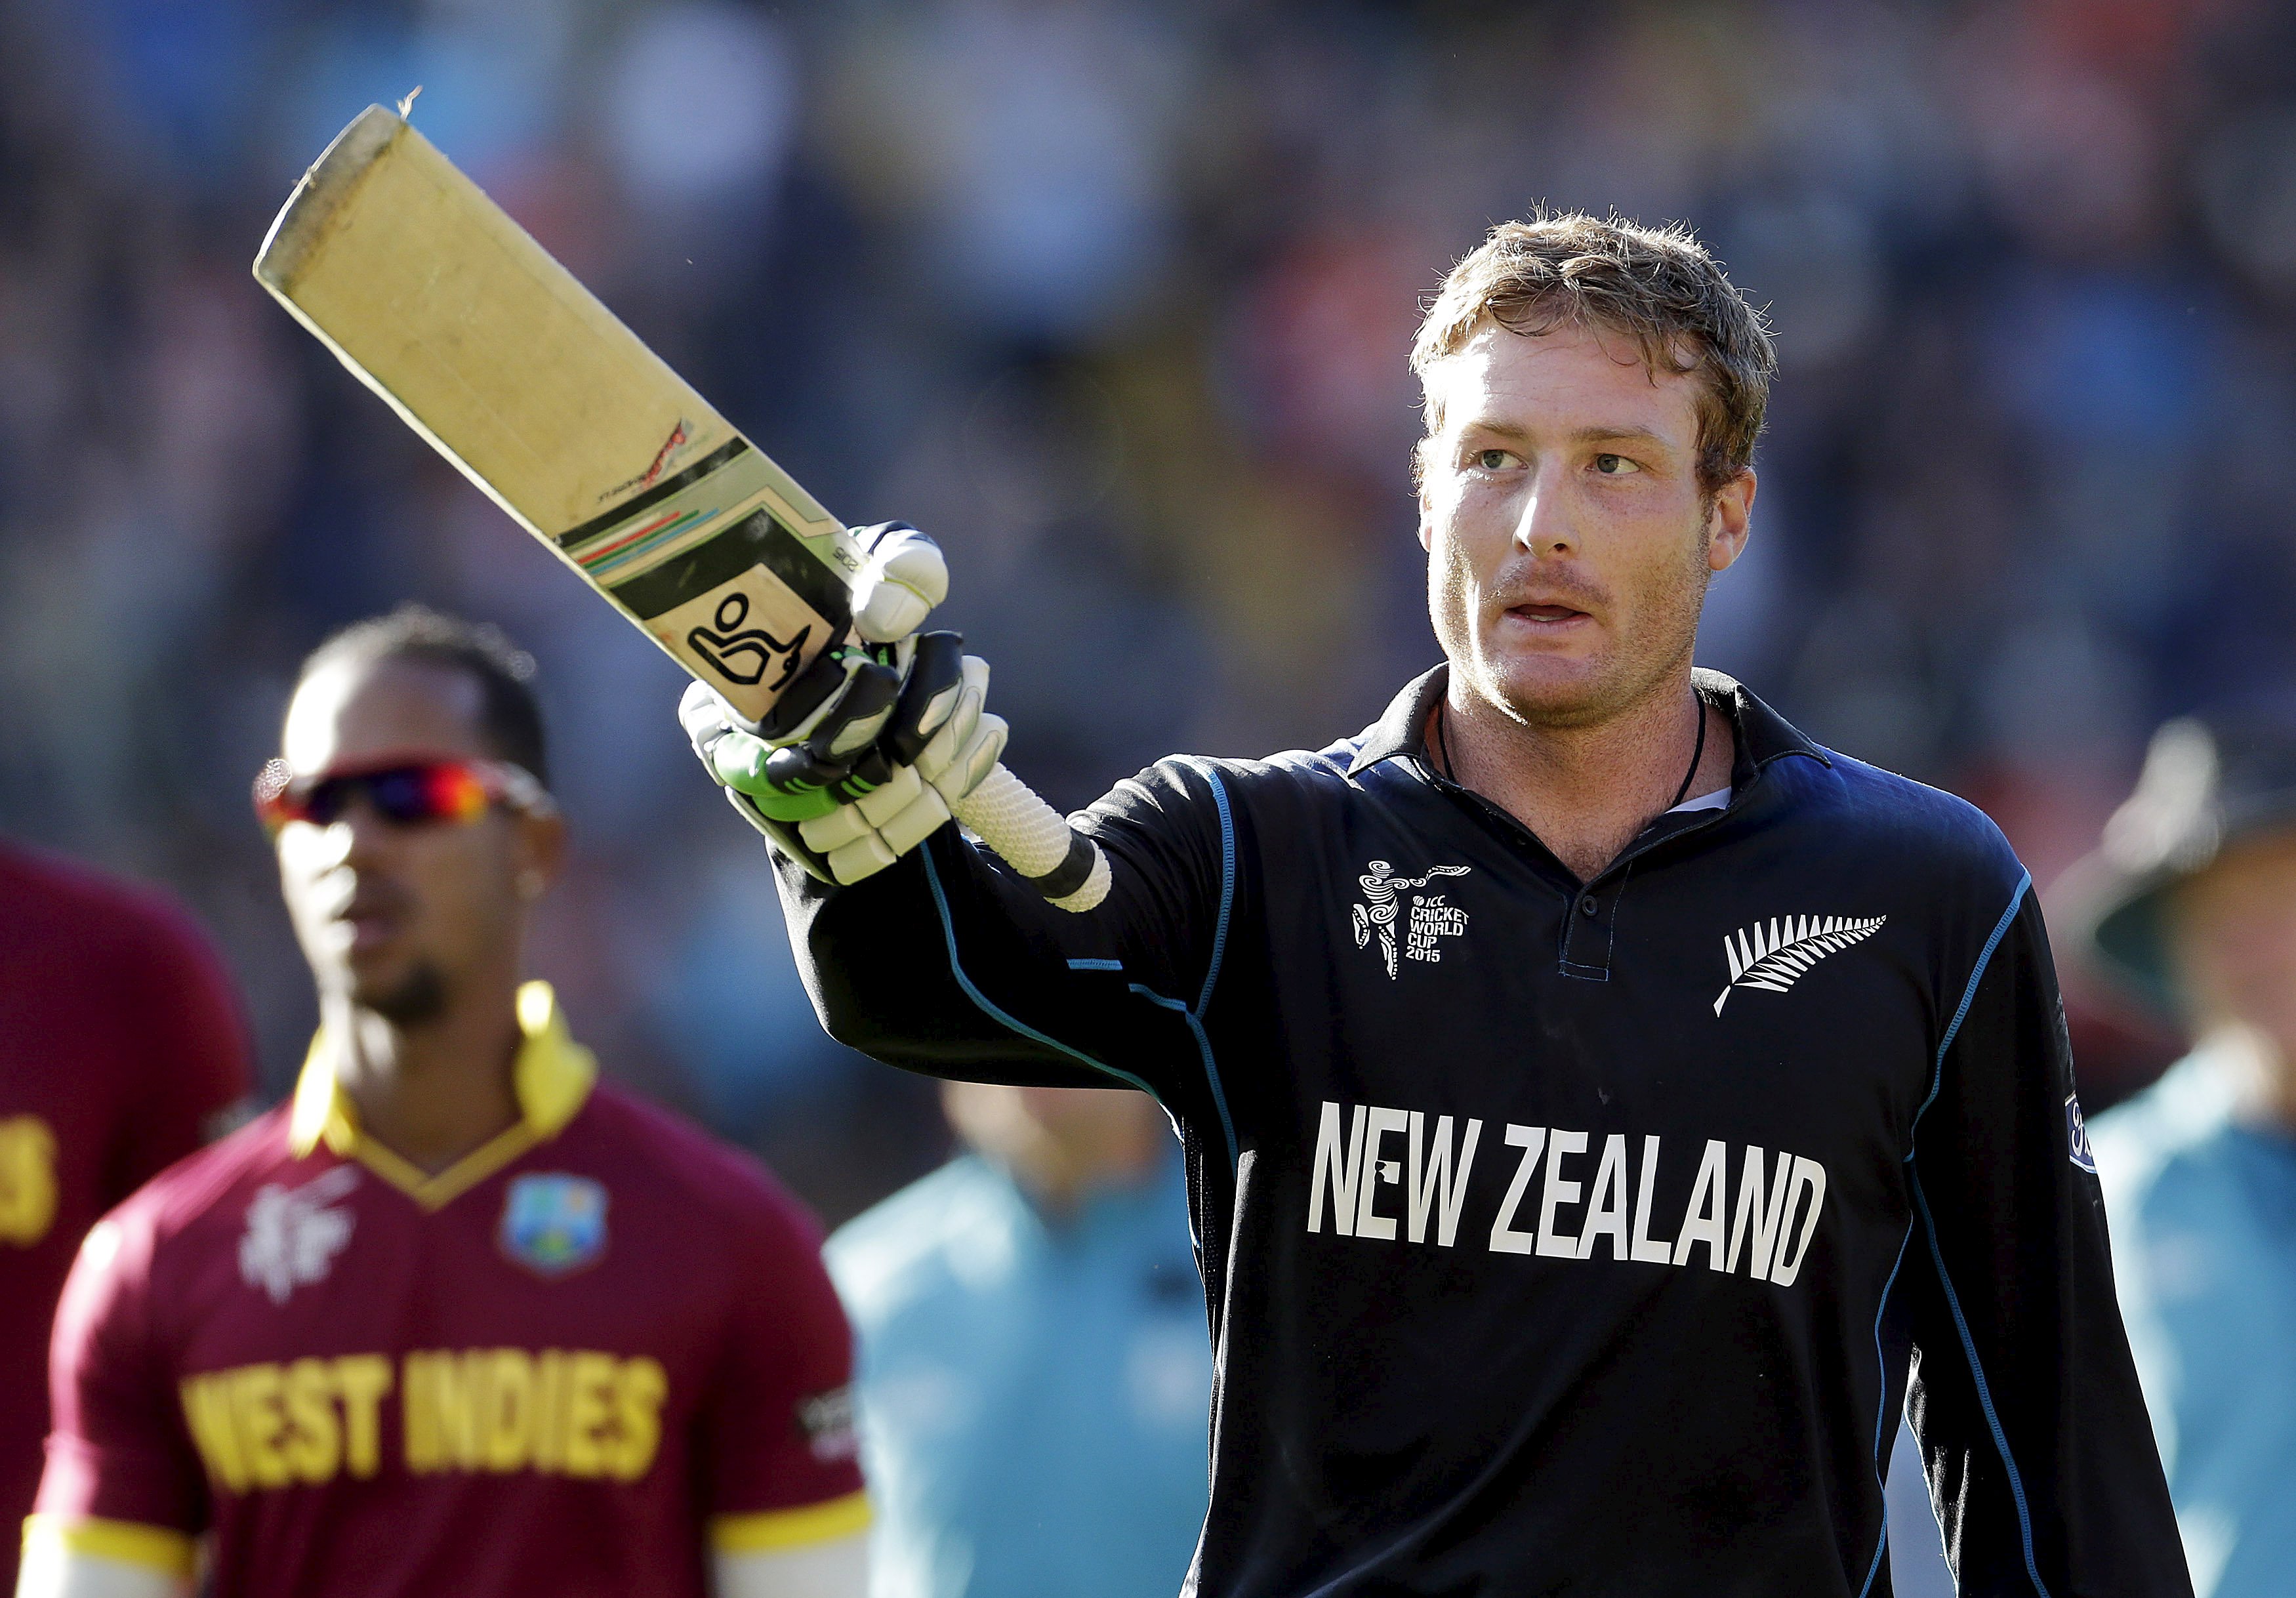 New Zealand batsman holding up a bat.